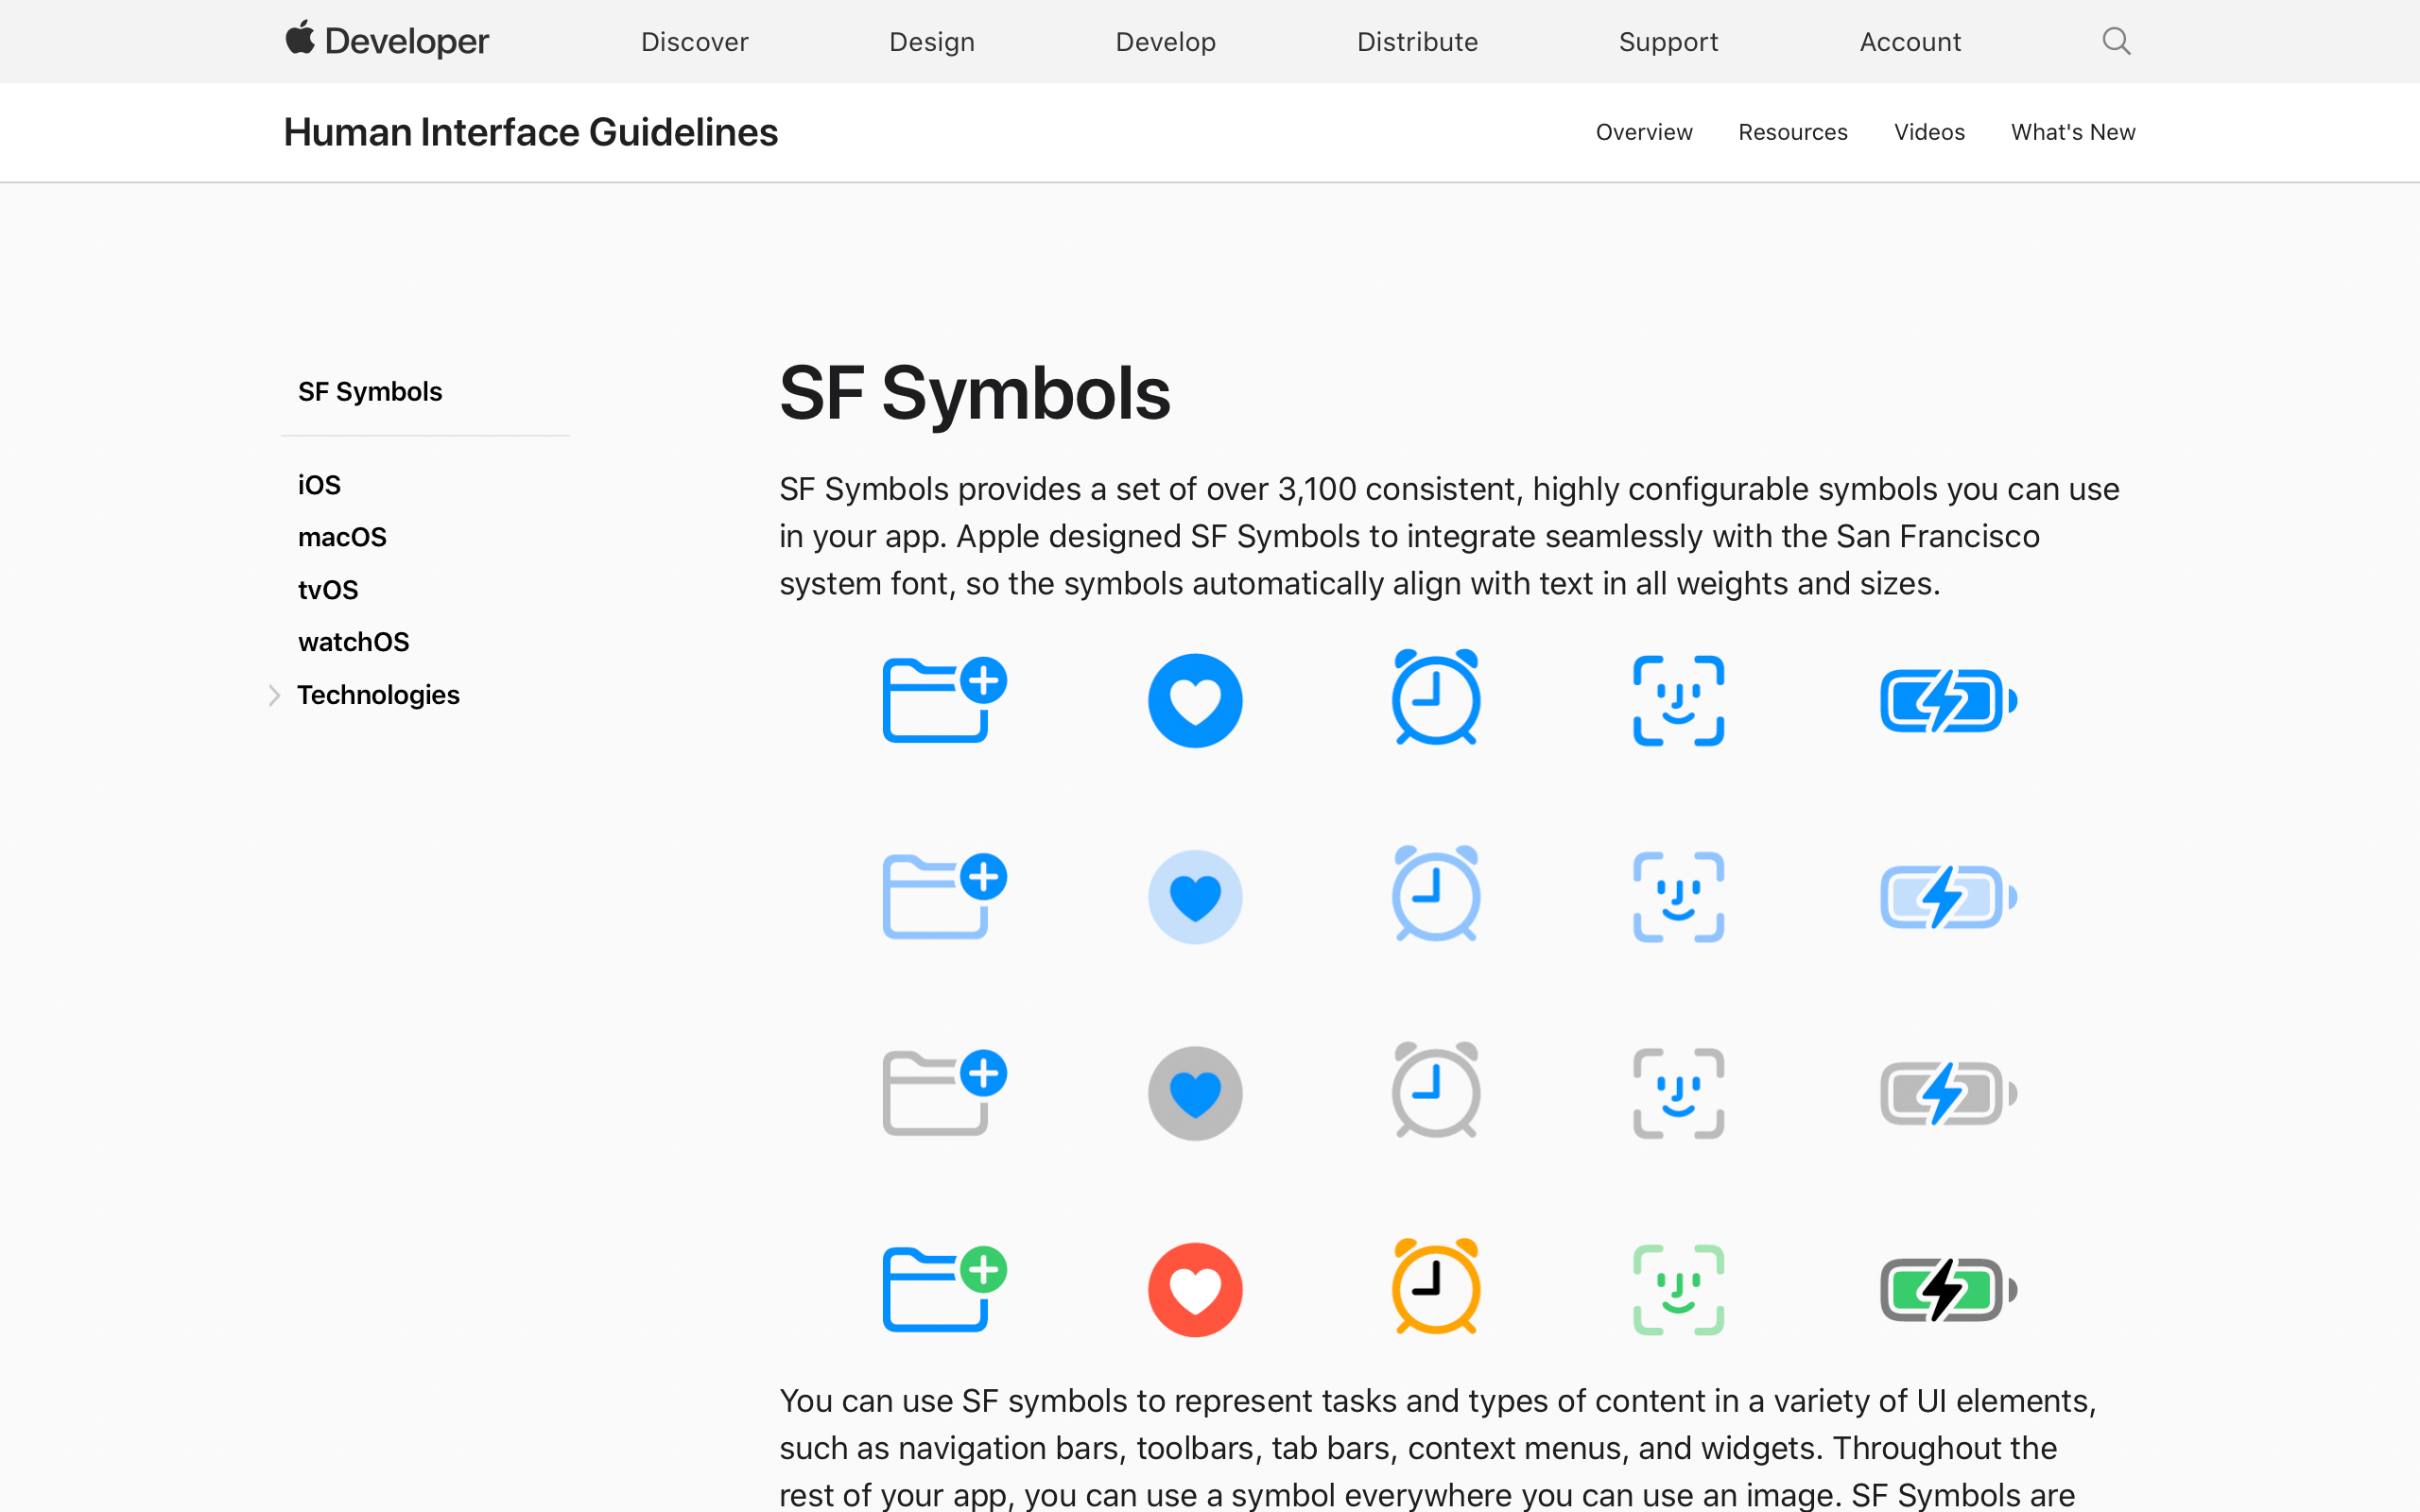 The Wikipedia iOS app uses SF Symbols